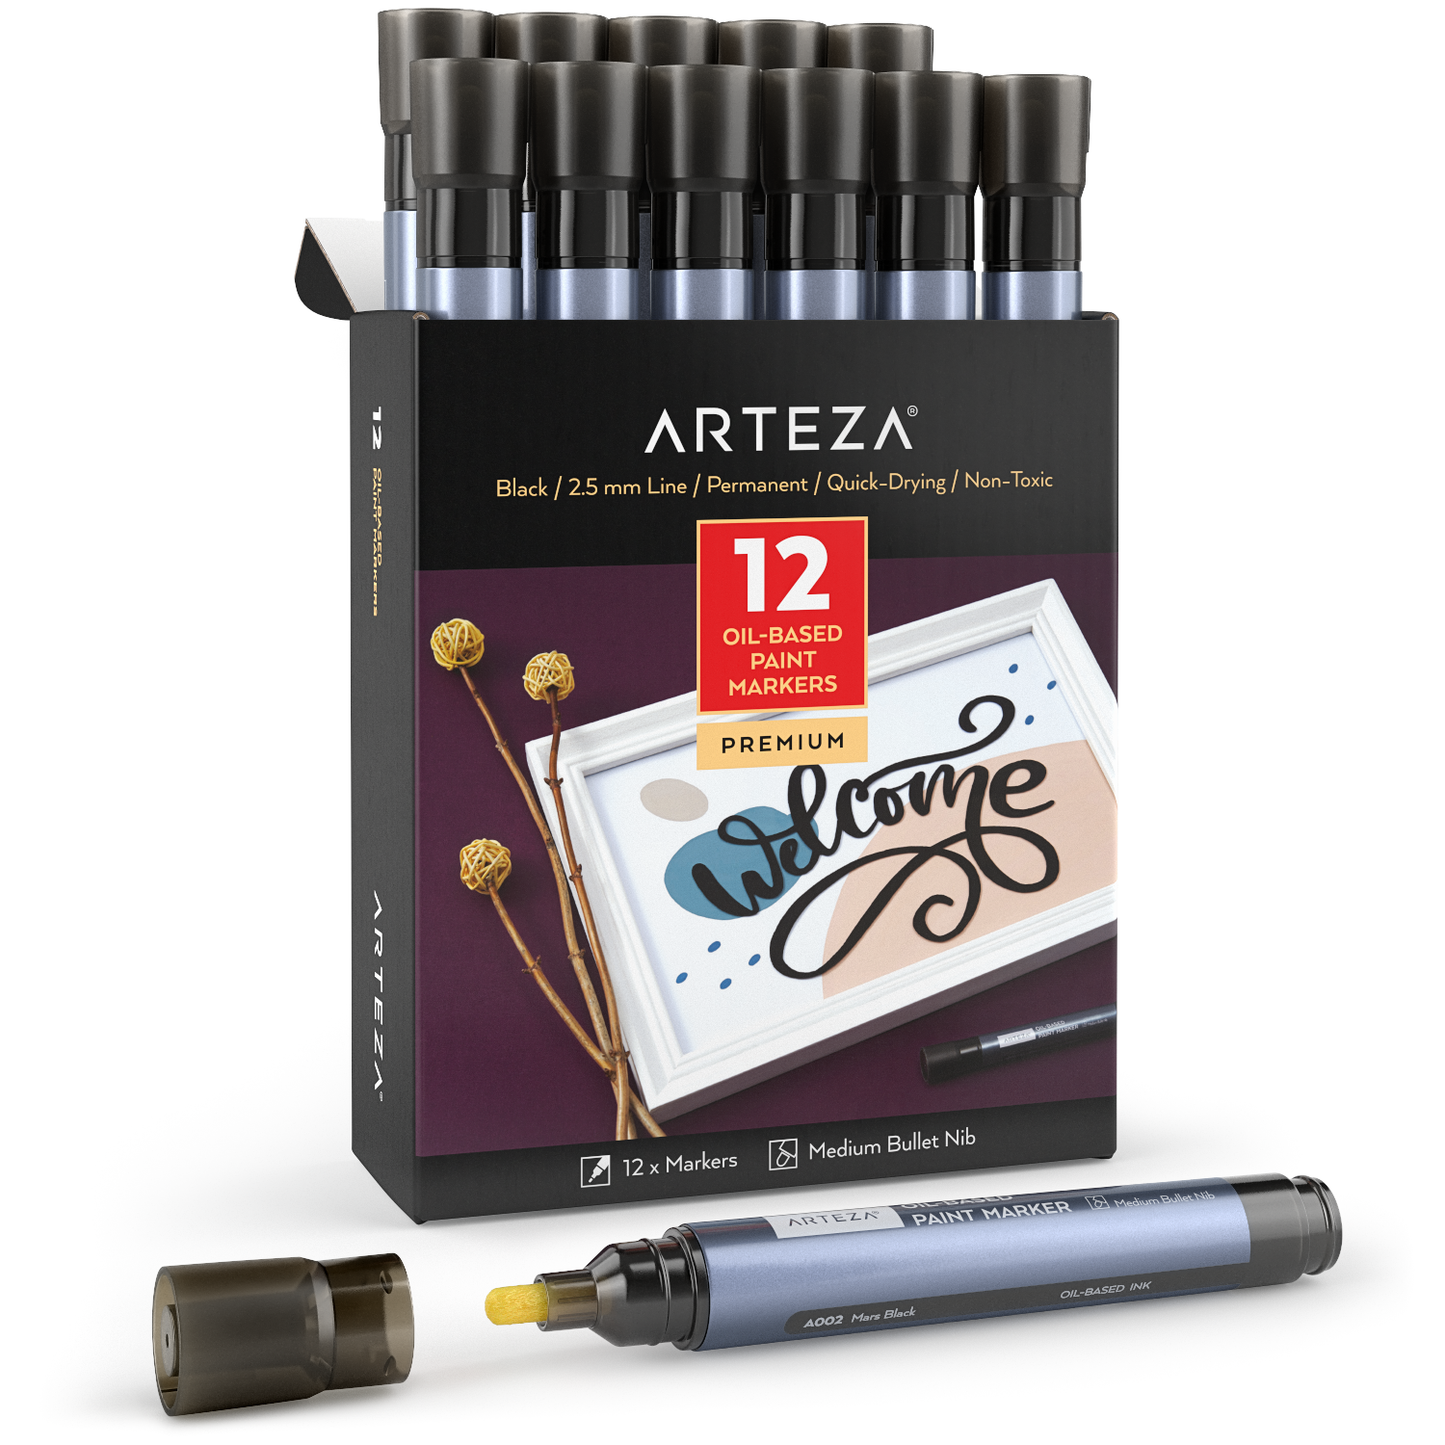 Arteza Black Medium Bullet Nib Oil Based Paint Markers